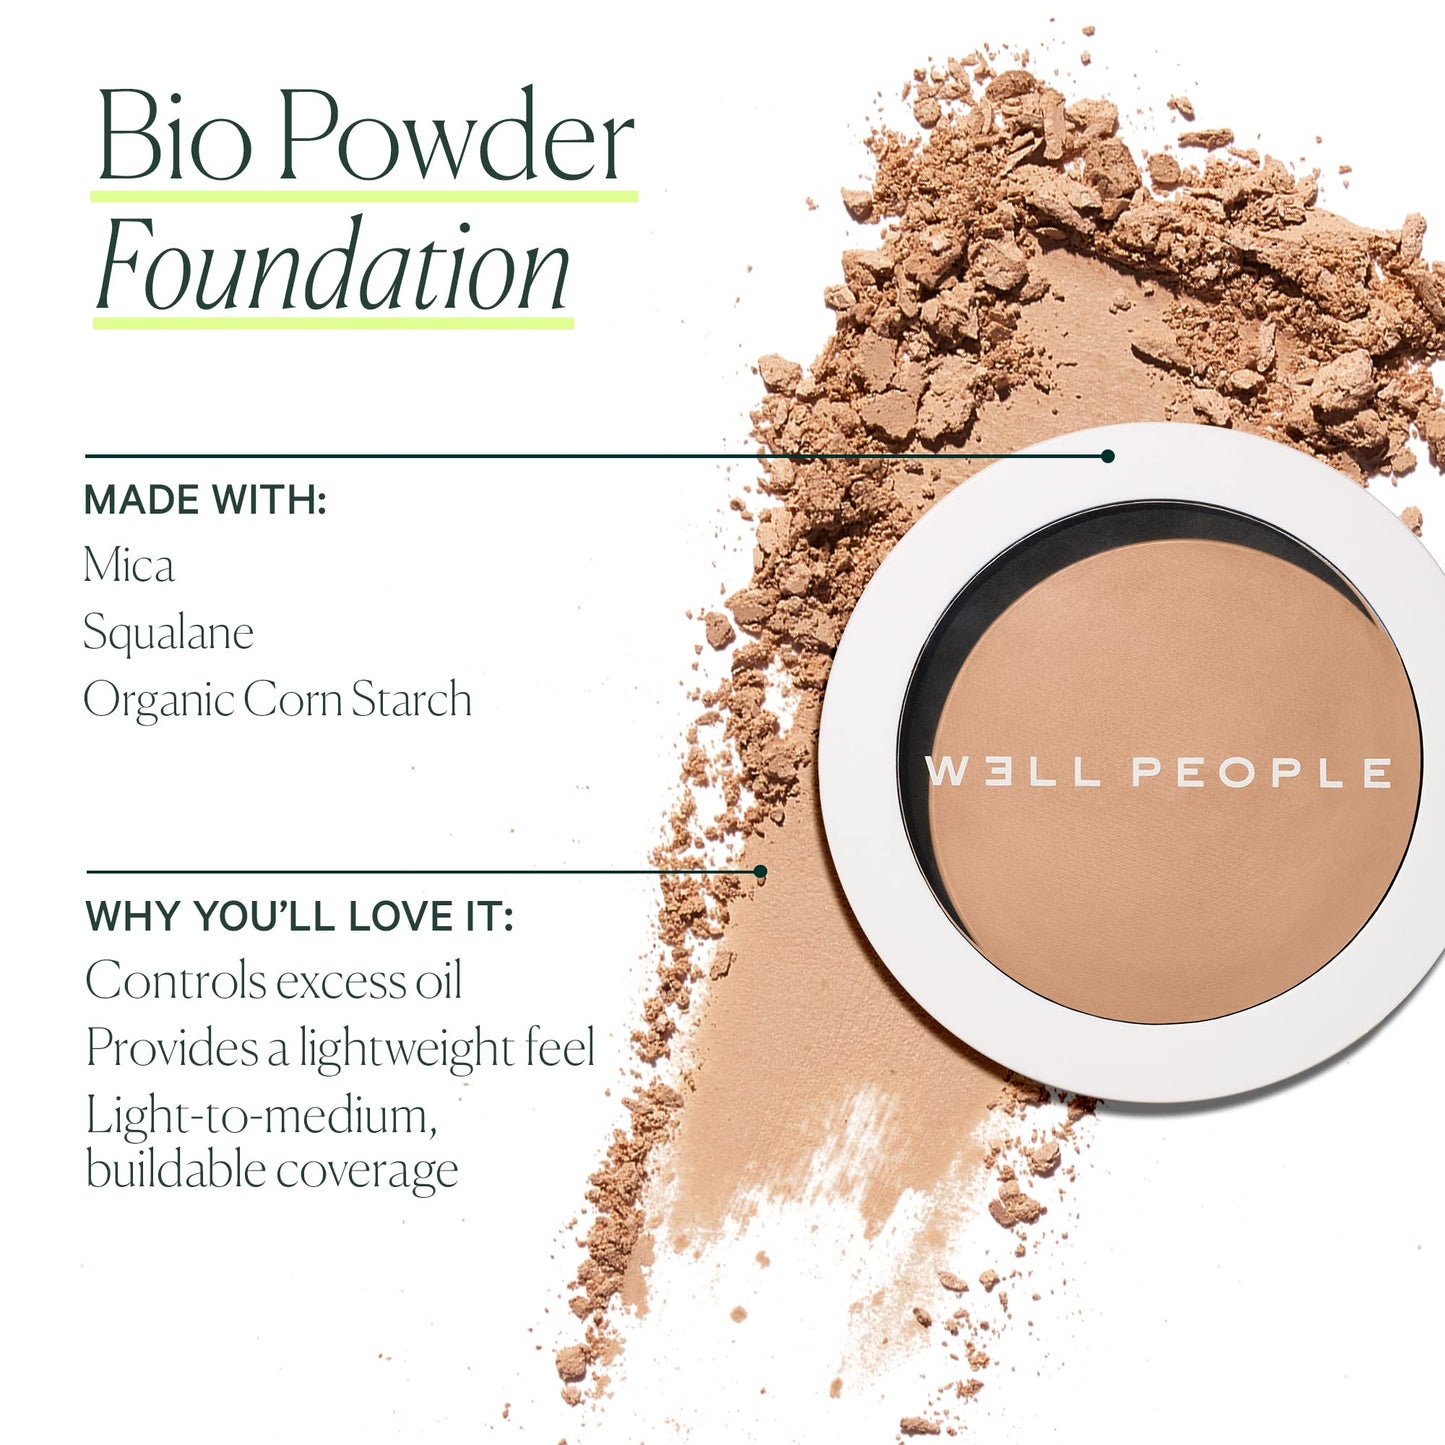 Well People Bio Powder Foundation, Lightweight & Hydrating Foundation For Perfecting & Smoothing Skin, Semi-Matte Finish, Vegan & Cruelty-free, 1C